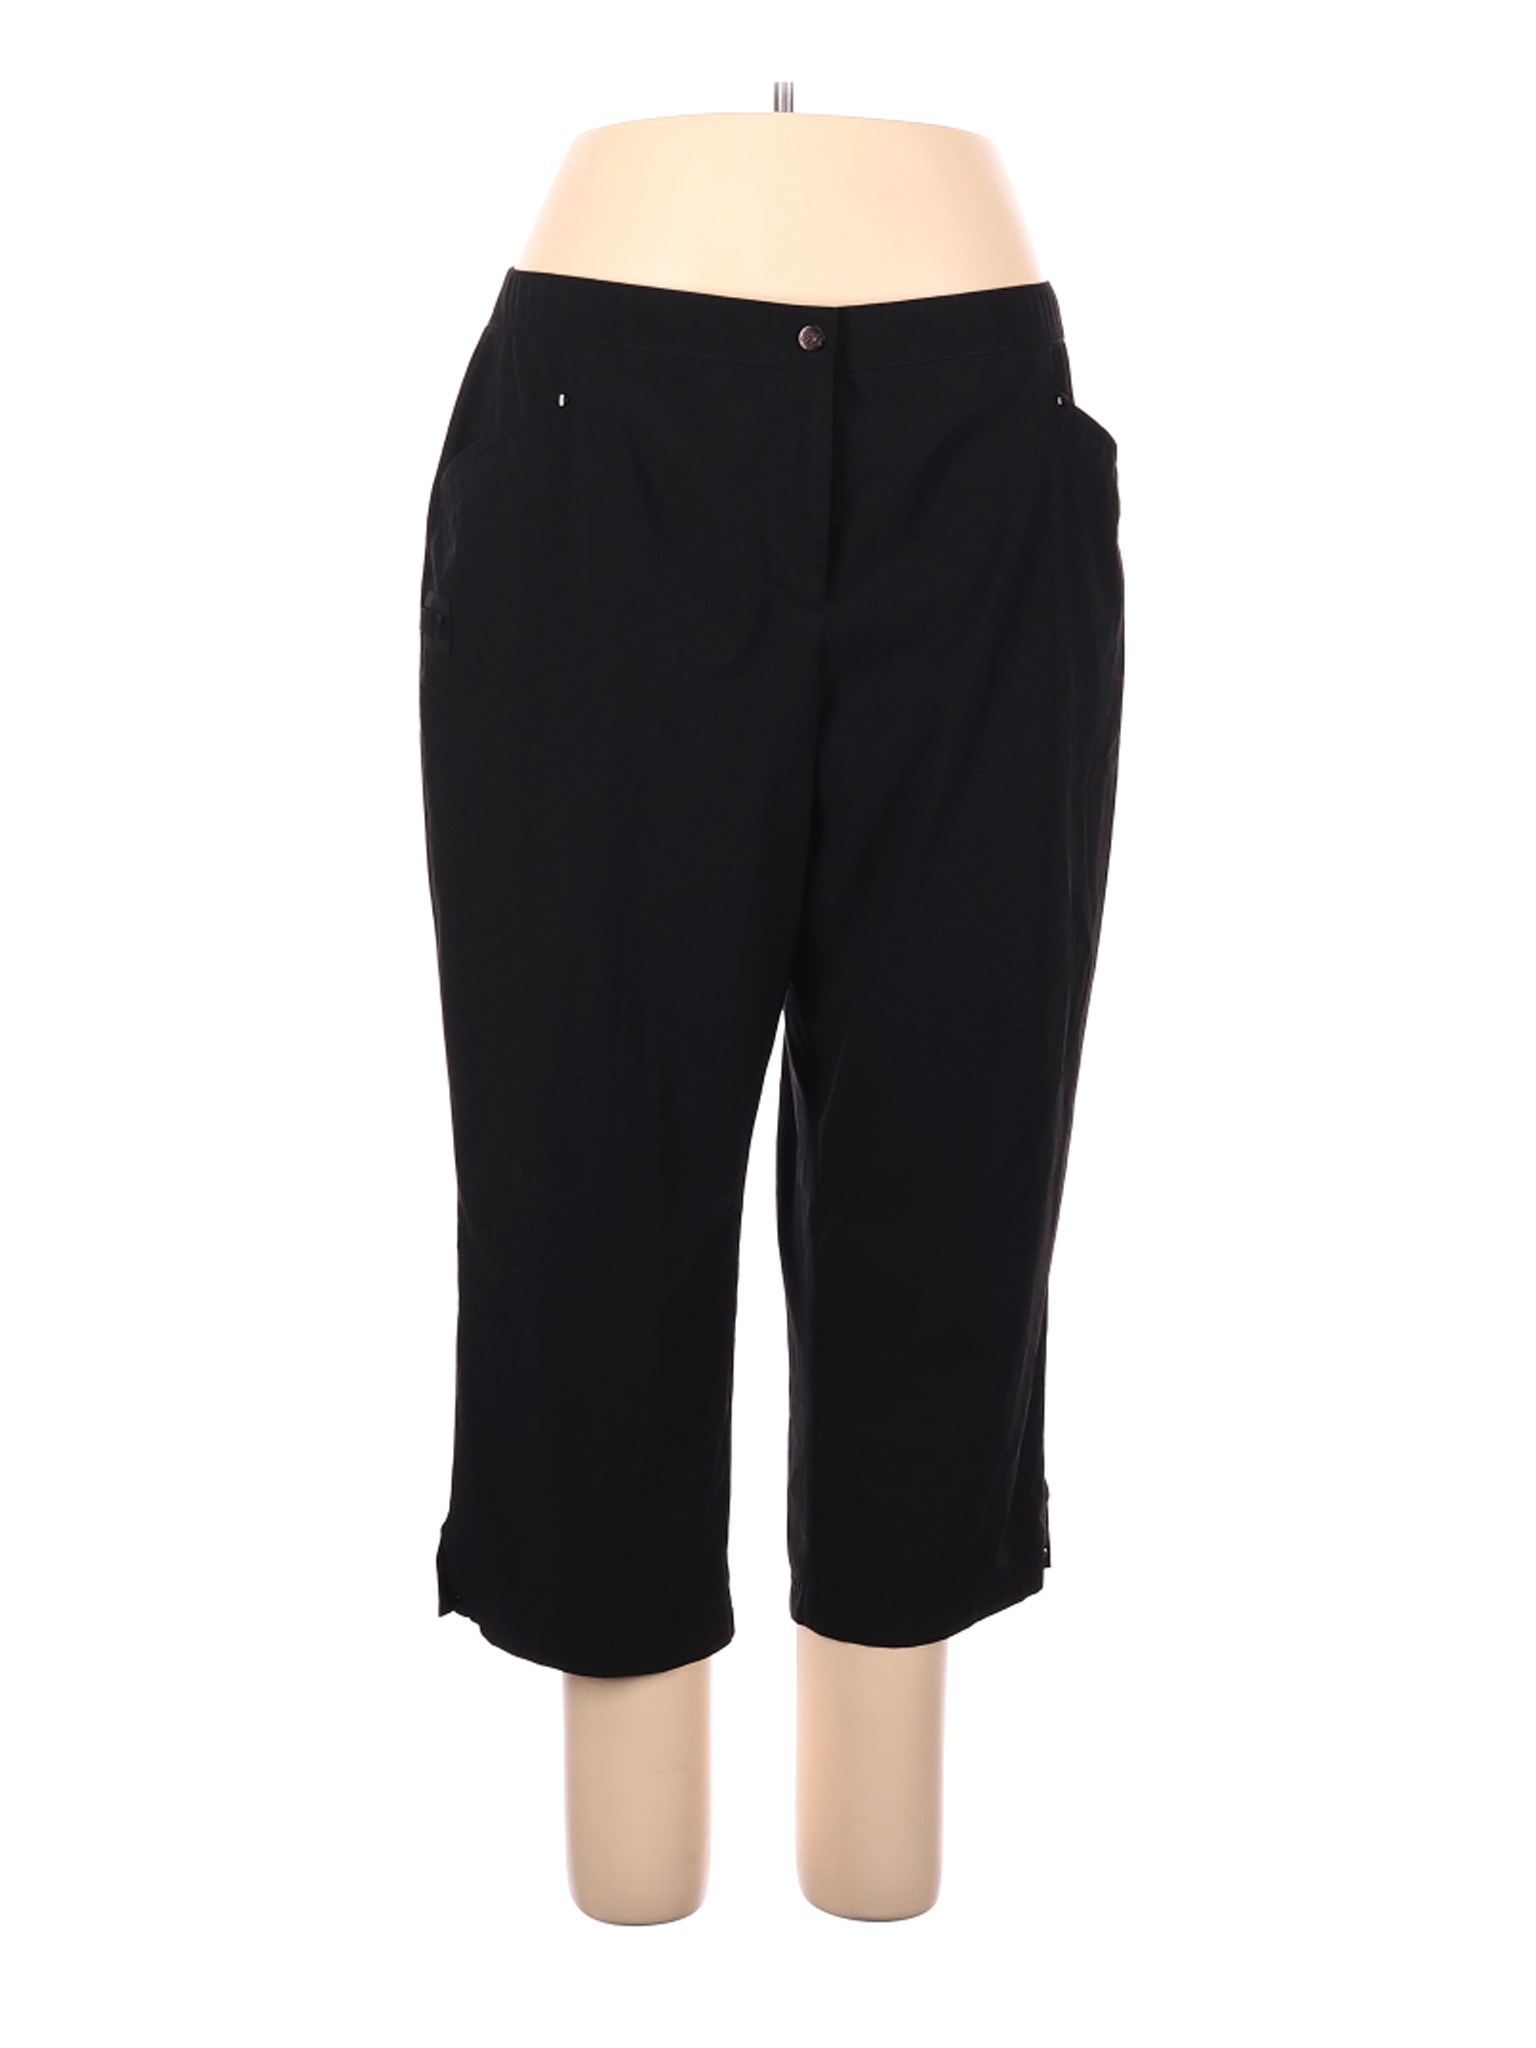 Zenergy by Chico's Women Black Active Pants XL | eBay